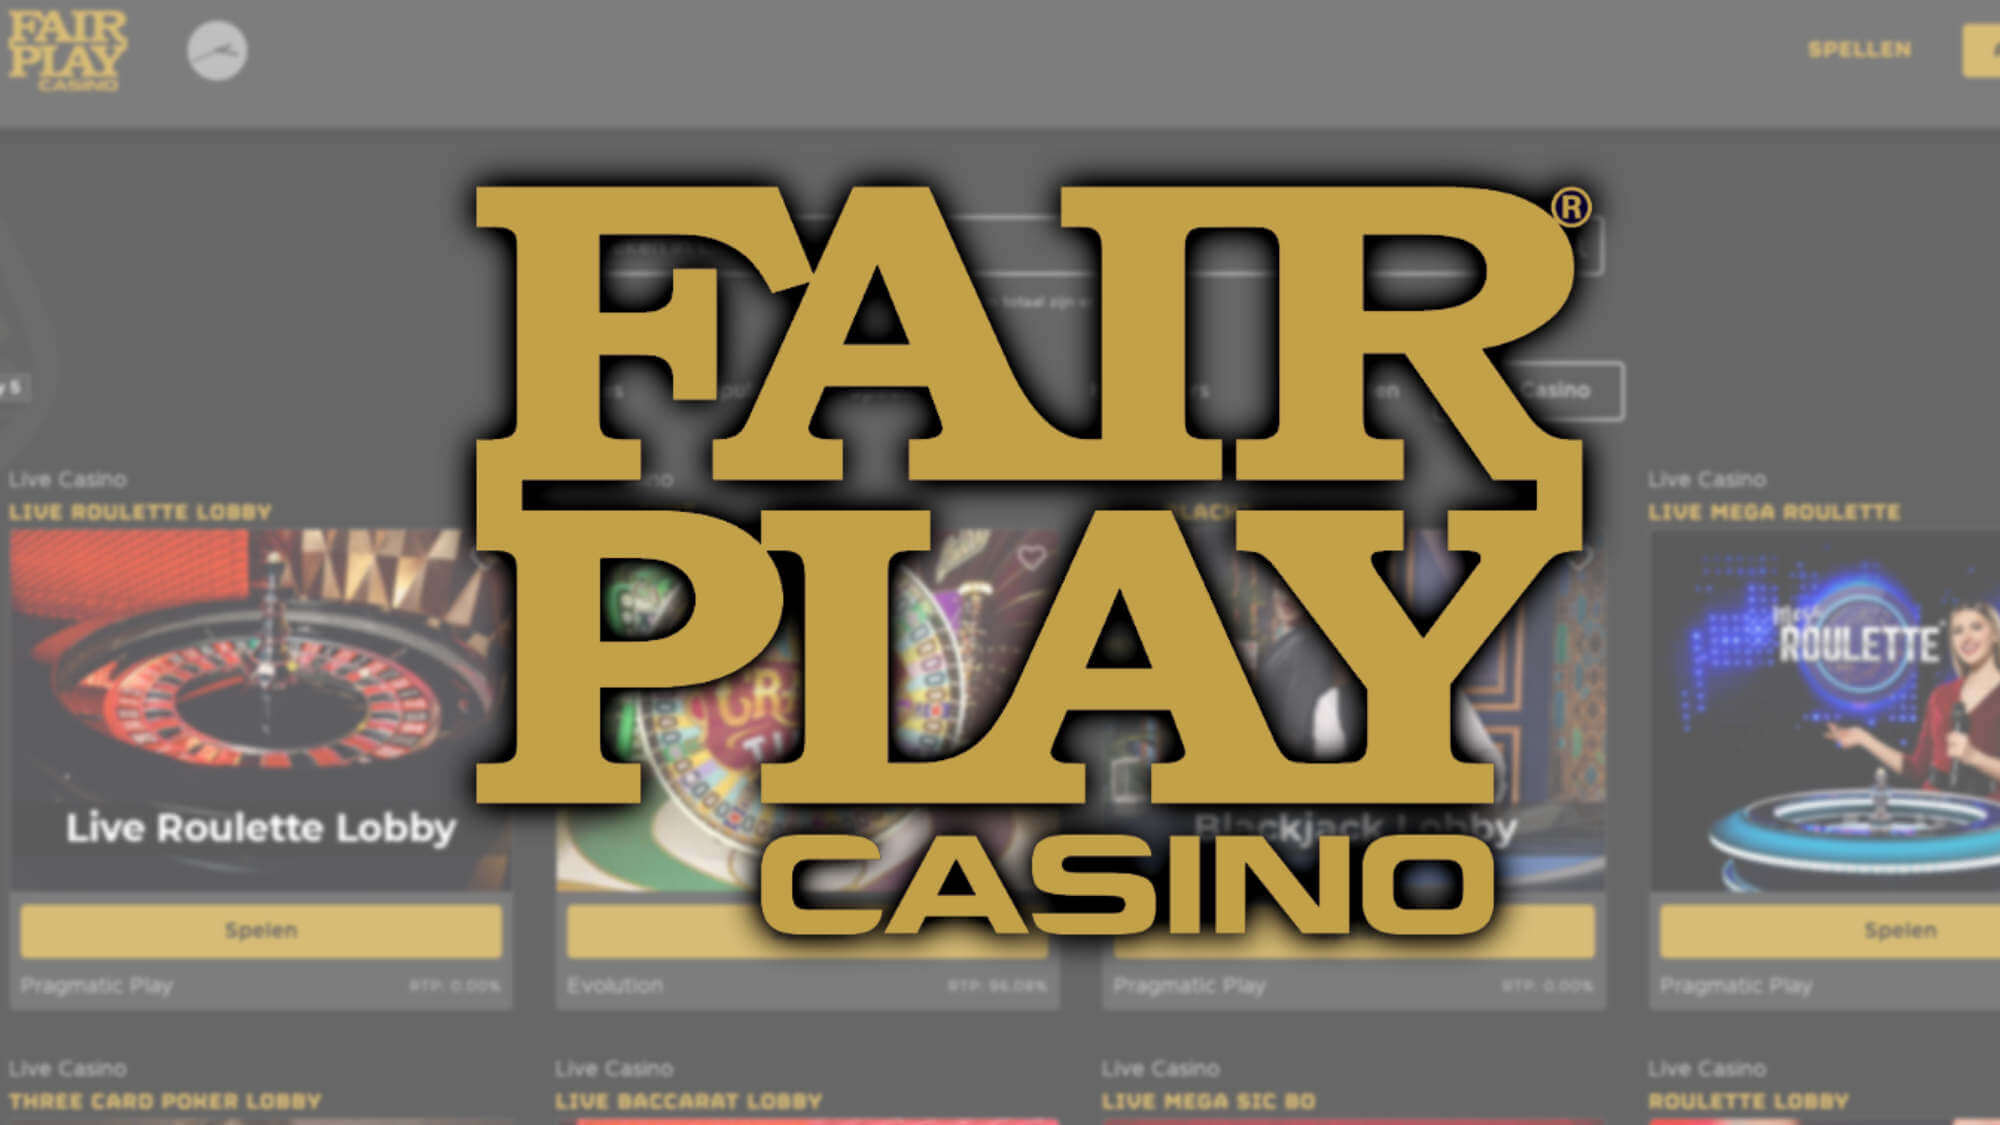 Fair Play Casino Live